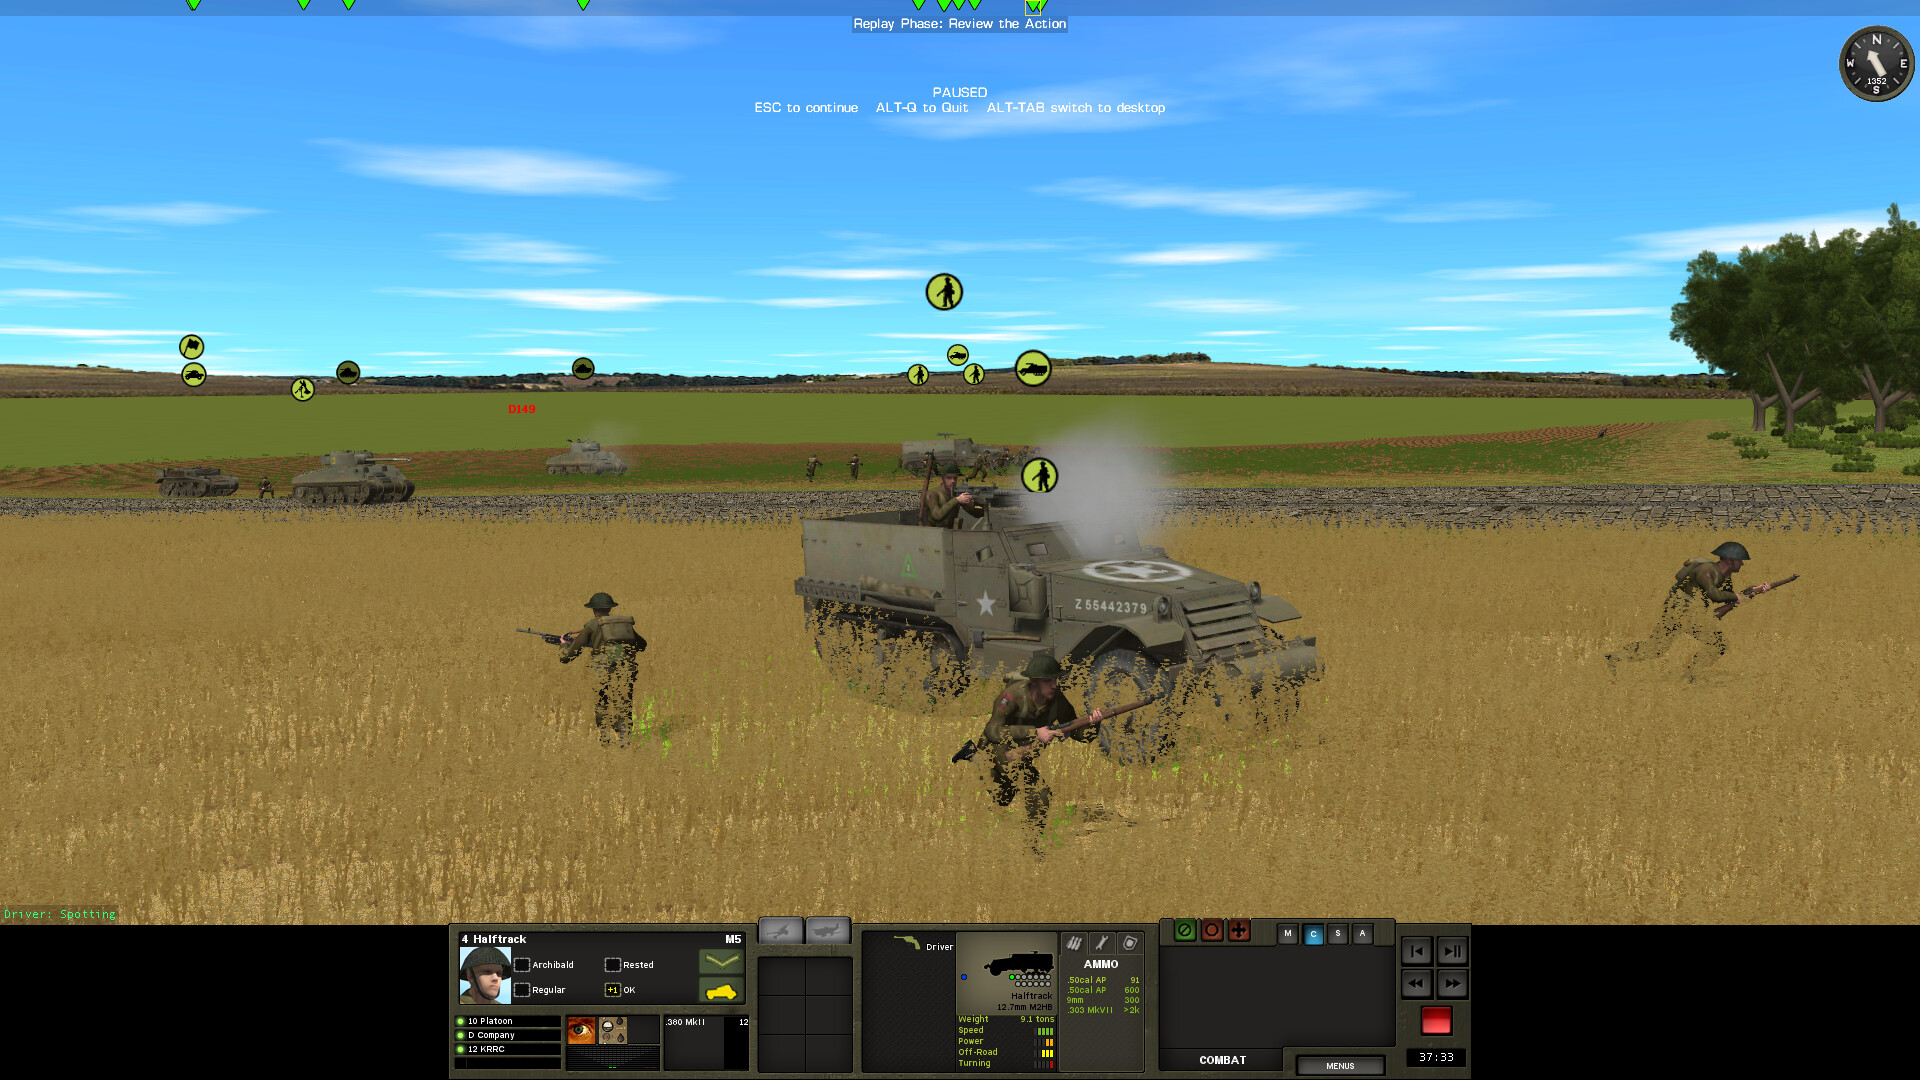 Combat Mission: Battle For Normandy - Battle Pack 1 DLC Steam CD Key